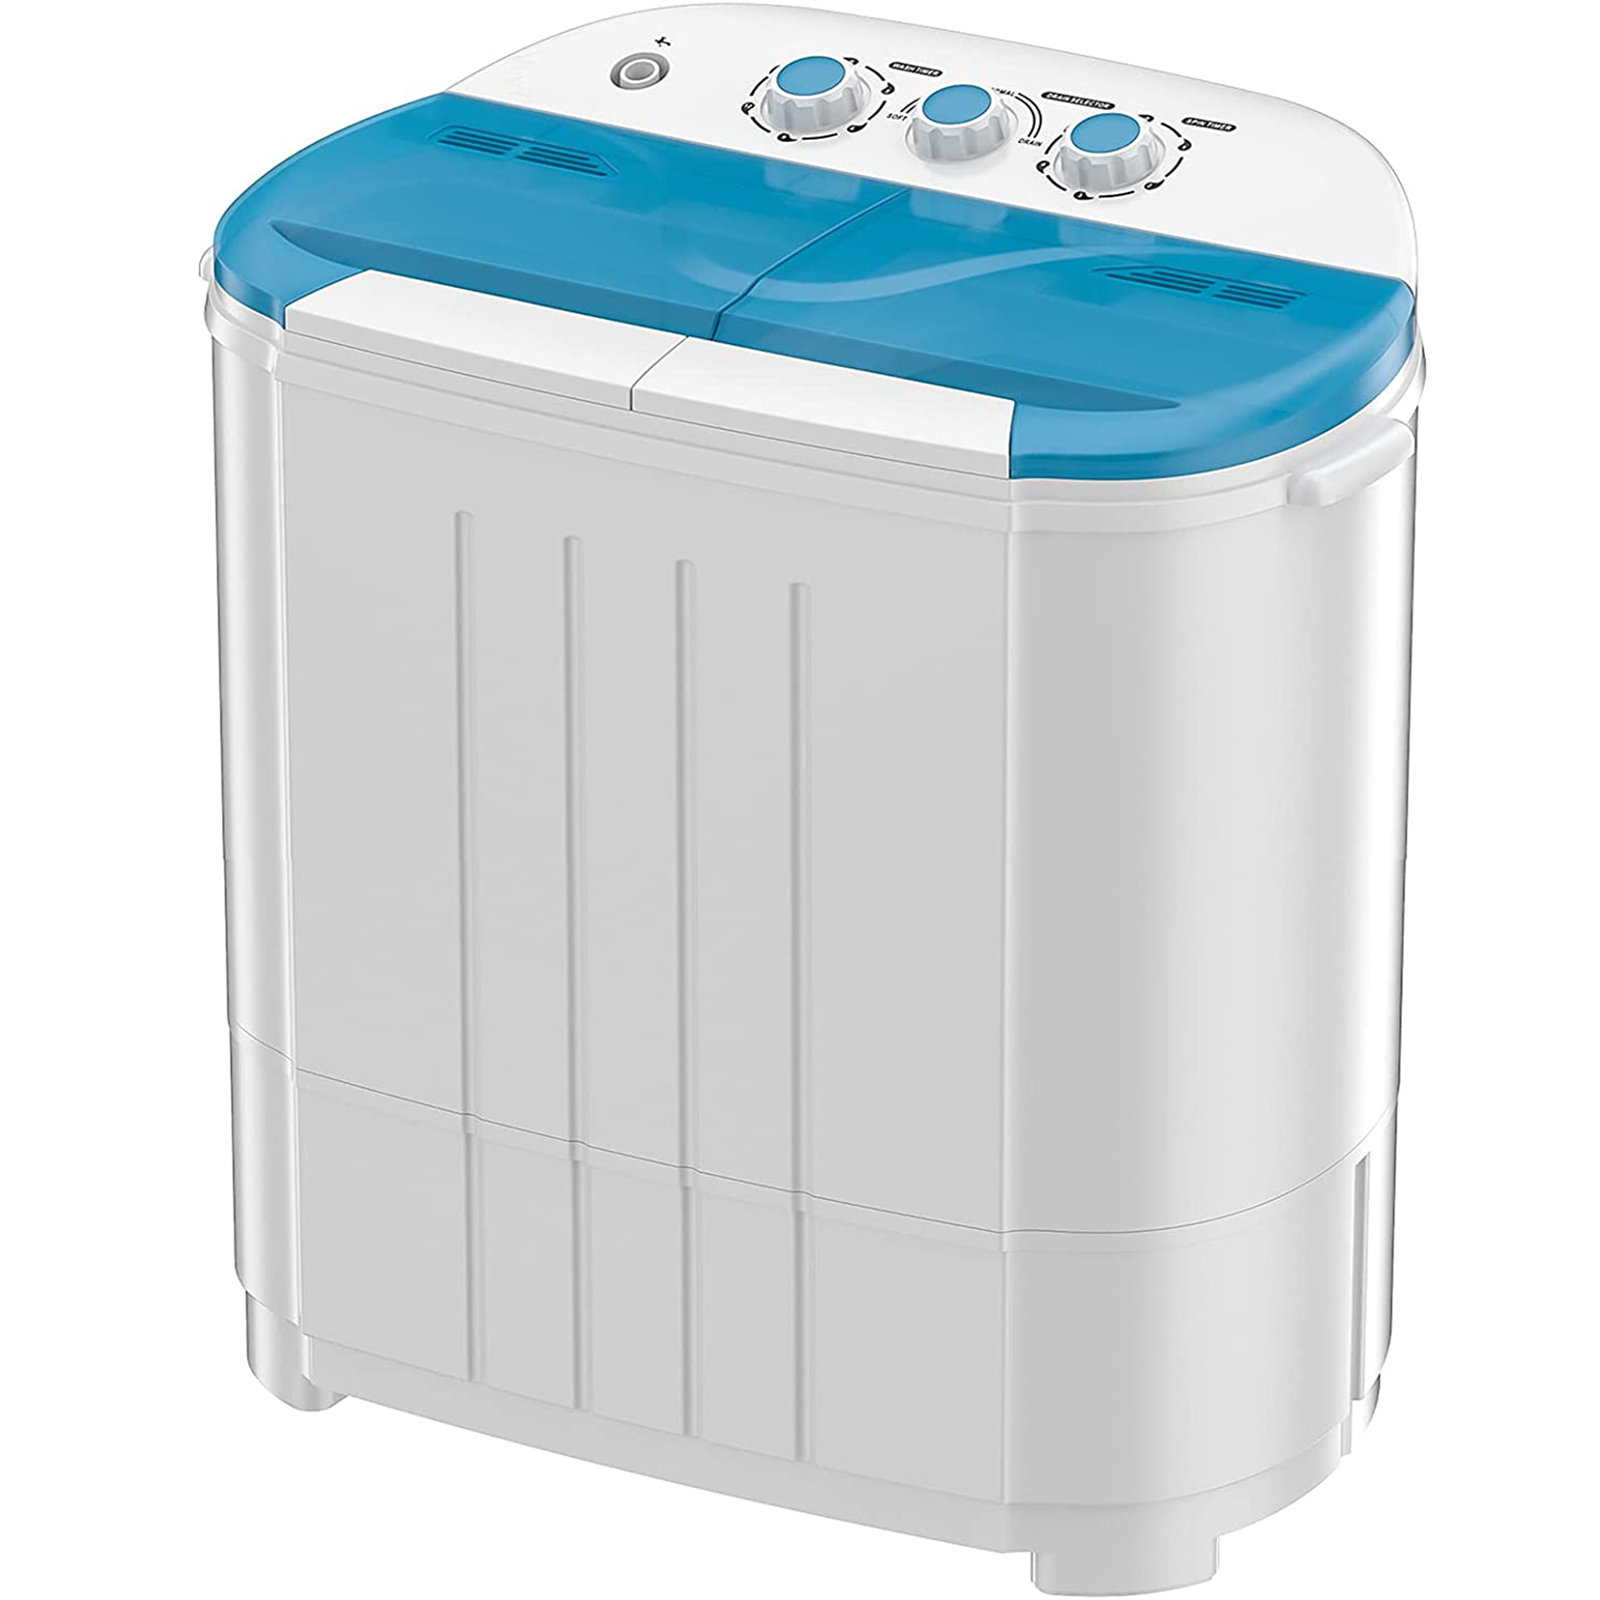 Intergreat Portable Washing Machine